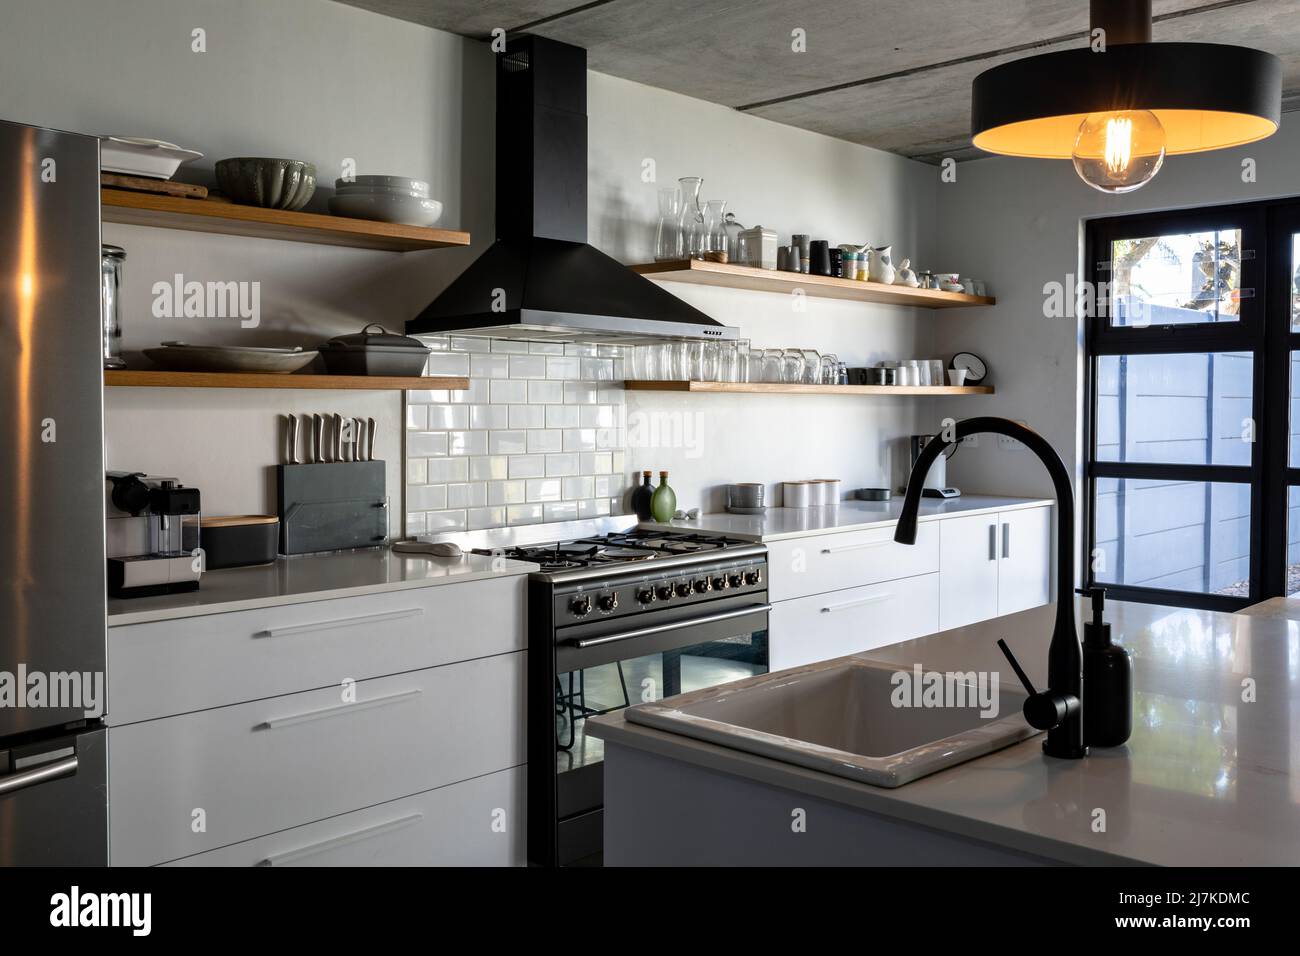 Interior of modern kitchen with illuminated pendant lights over sink at kitchen island Stock Photo